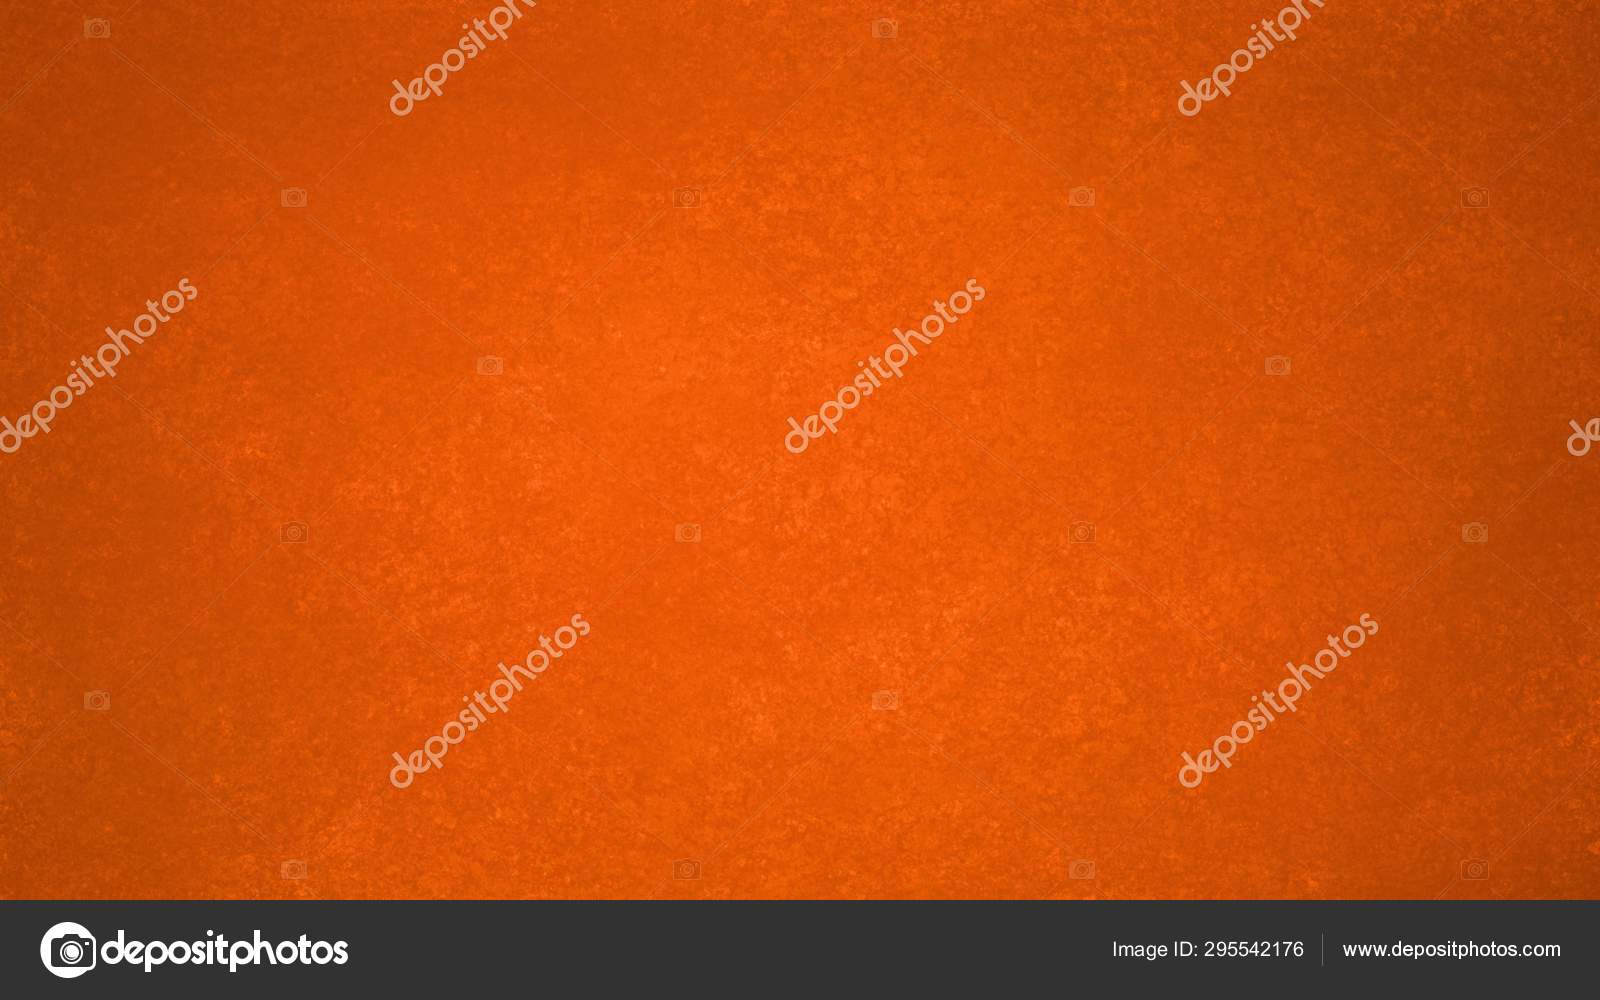 Burnt orange background Stock Photos, Royalty Free Burnt orange background  Images | Depositphotos